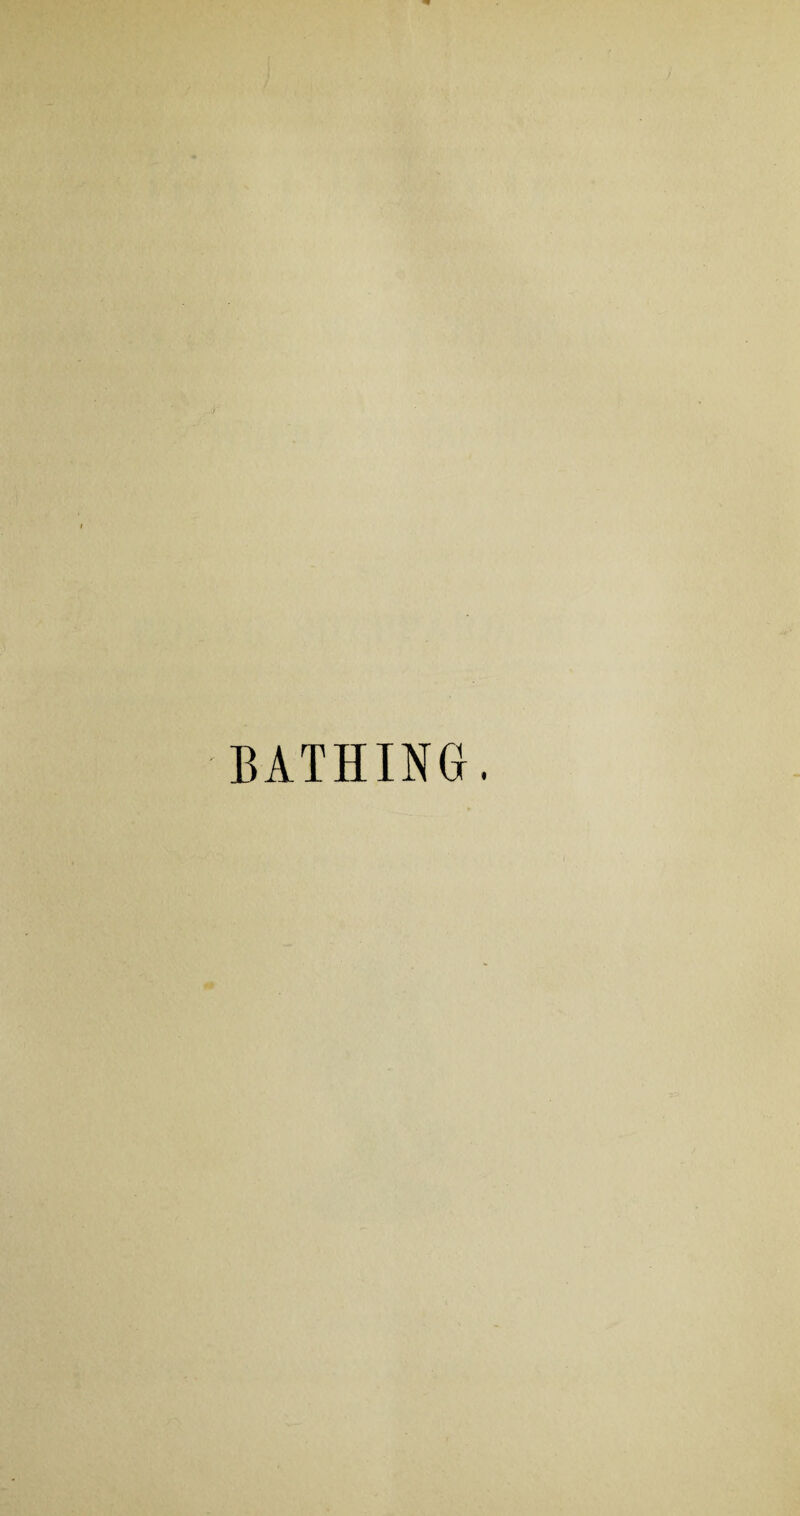 BATHING.